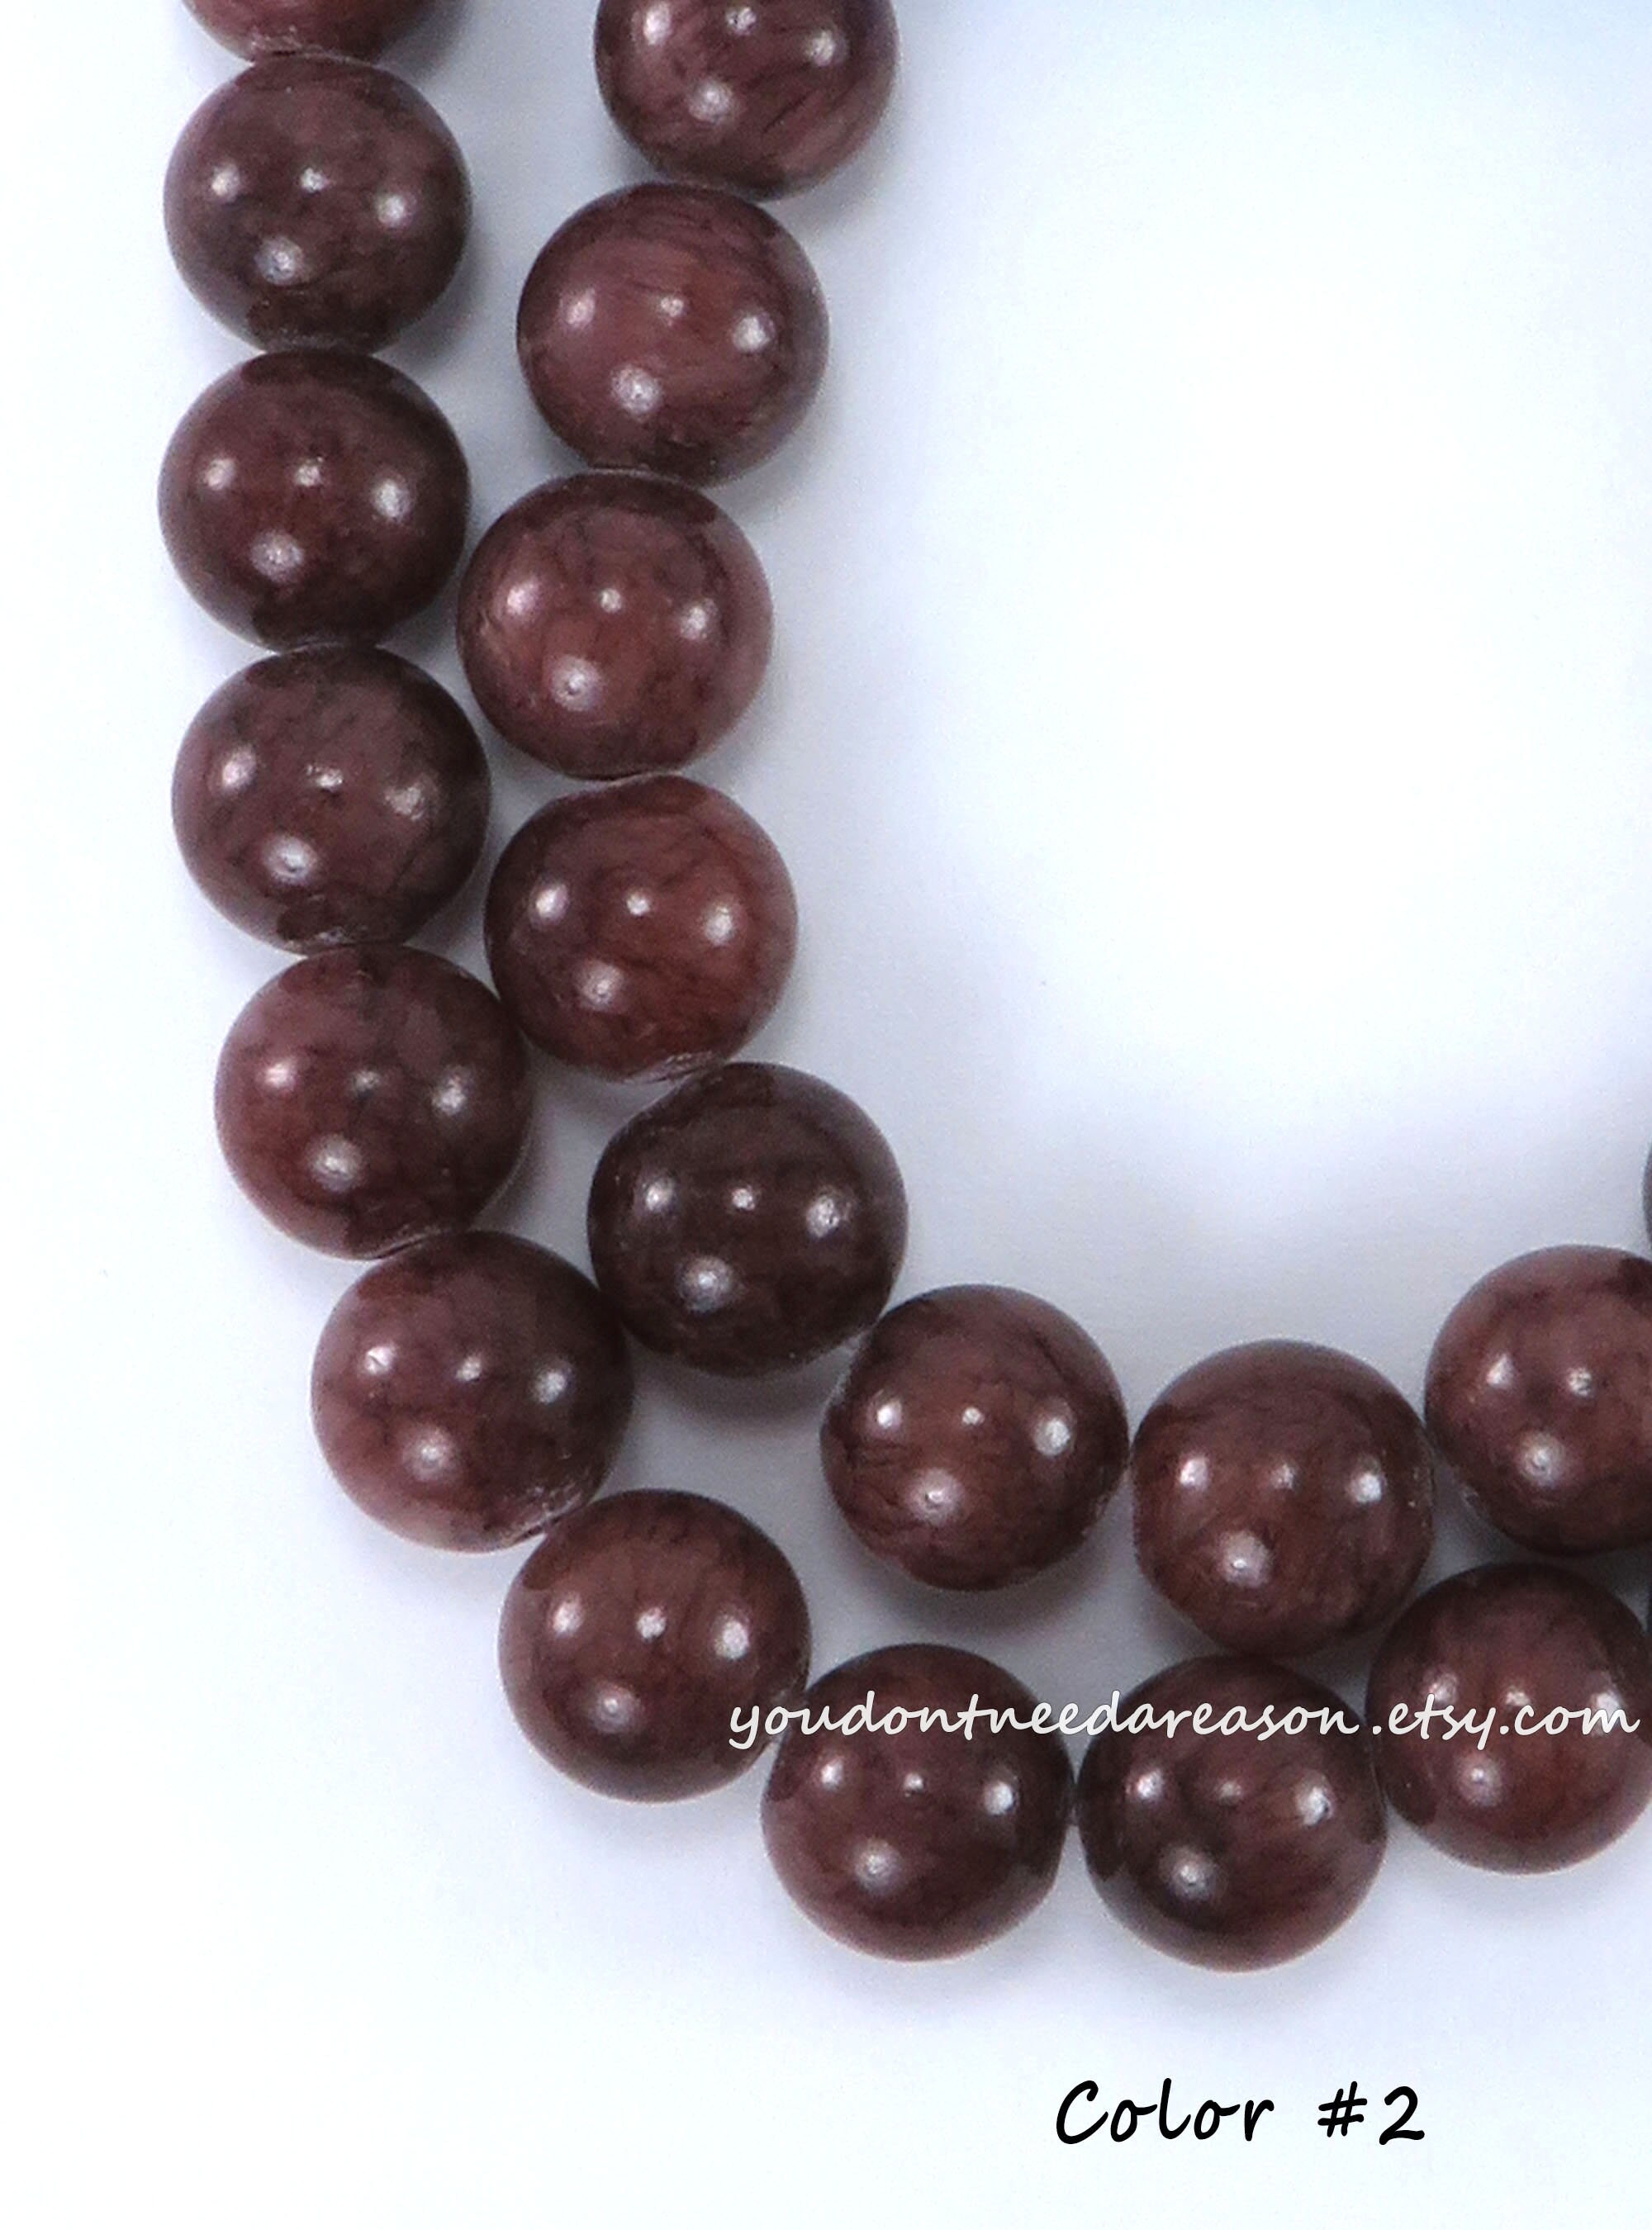 10mm Smooth Round Jade Gemstone Beads Colorful Jade Beads Natural Gemstone  Beads for Jewelry Making 